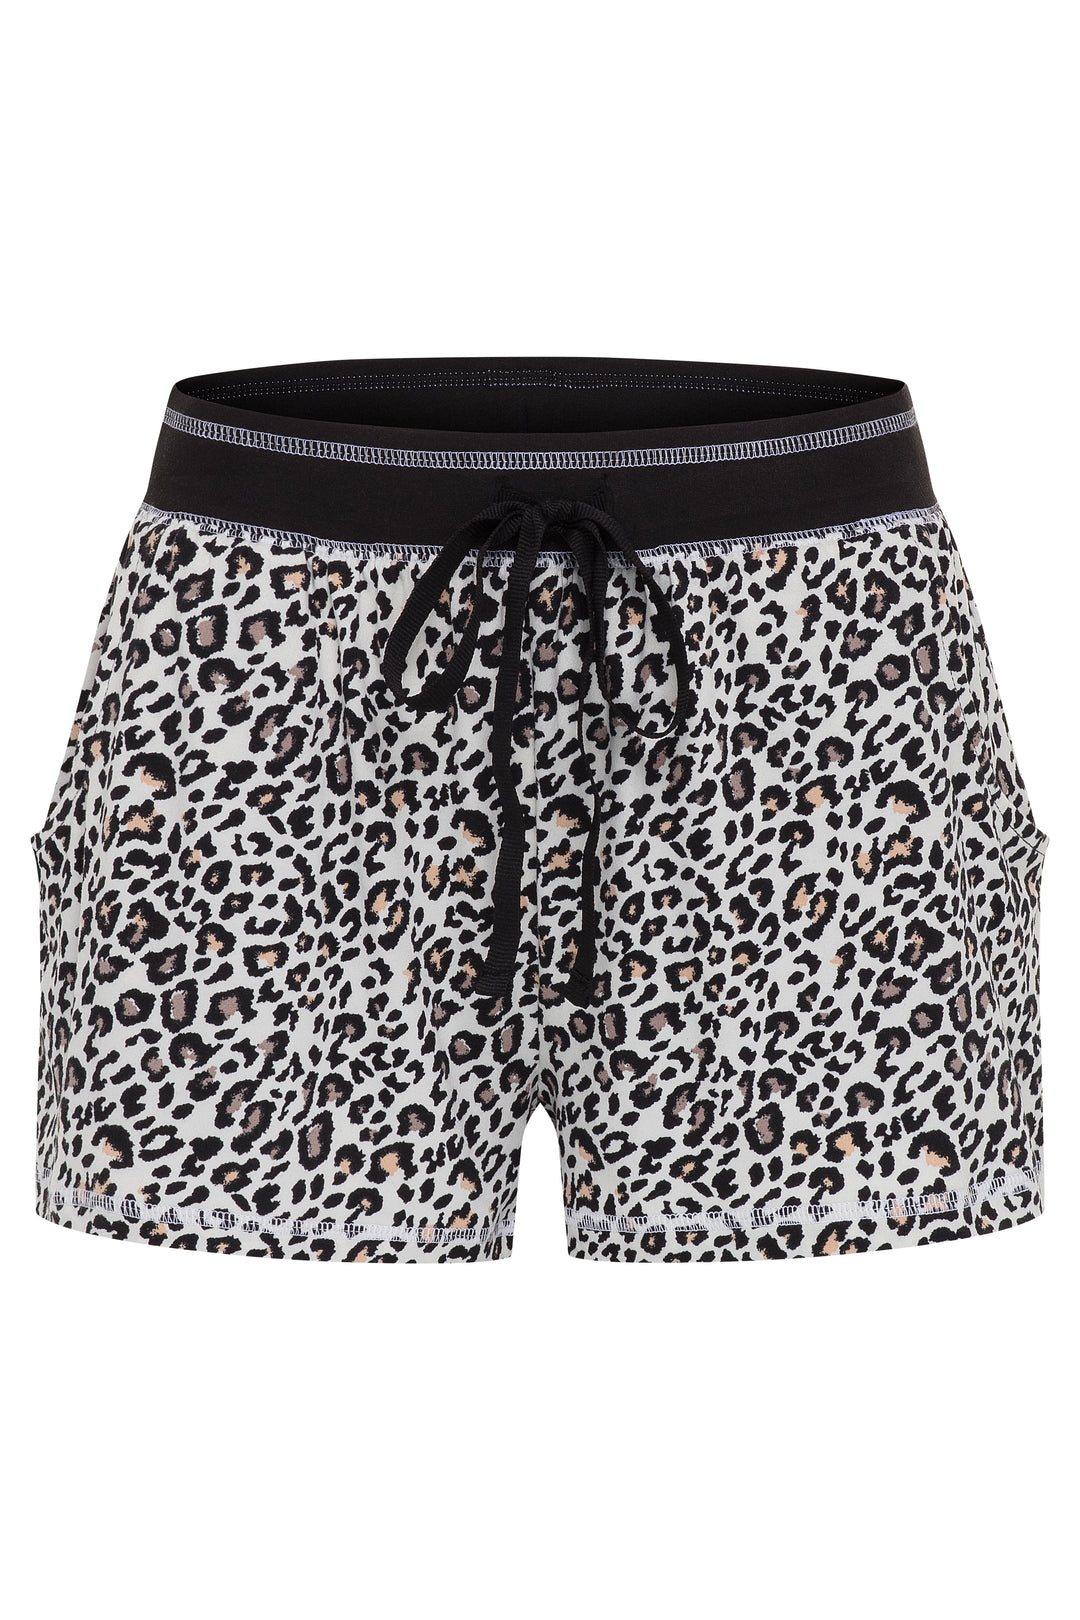 Cheetah patterned shorts as part of the René Rofé 2 Pack Lightweight Short Set